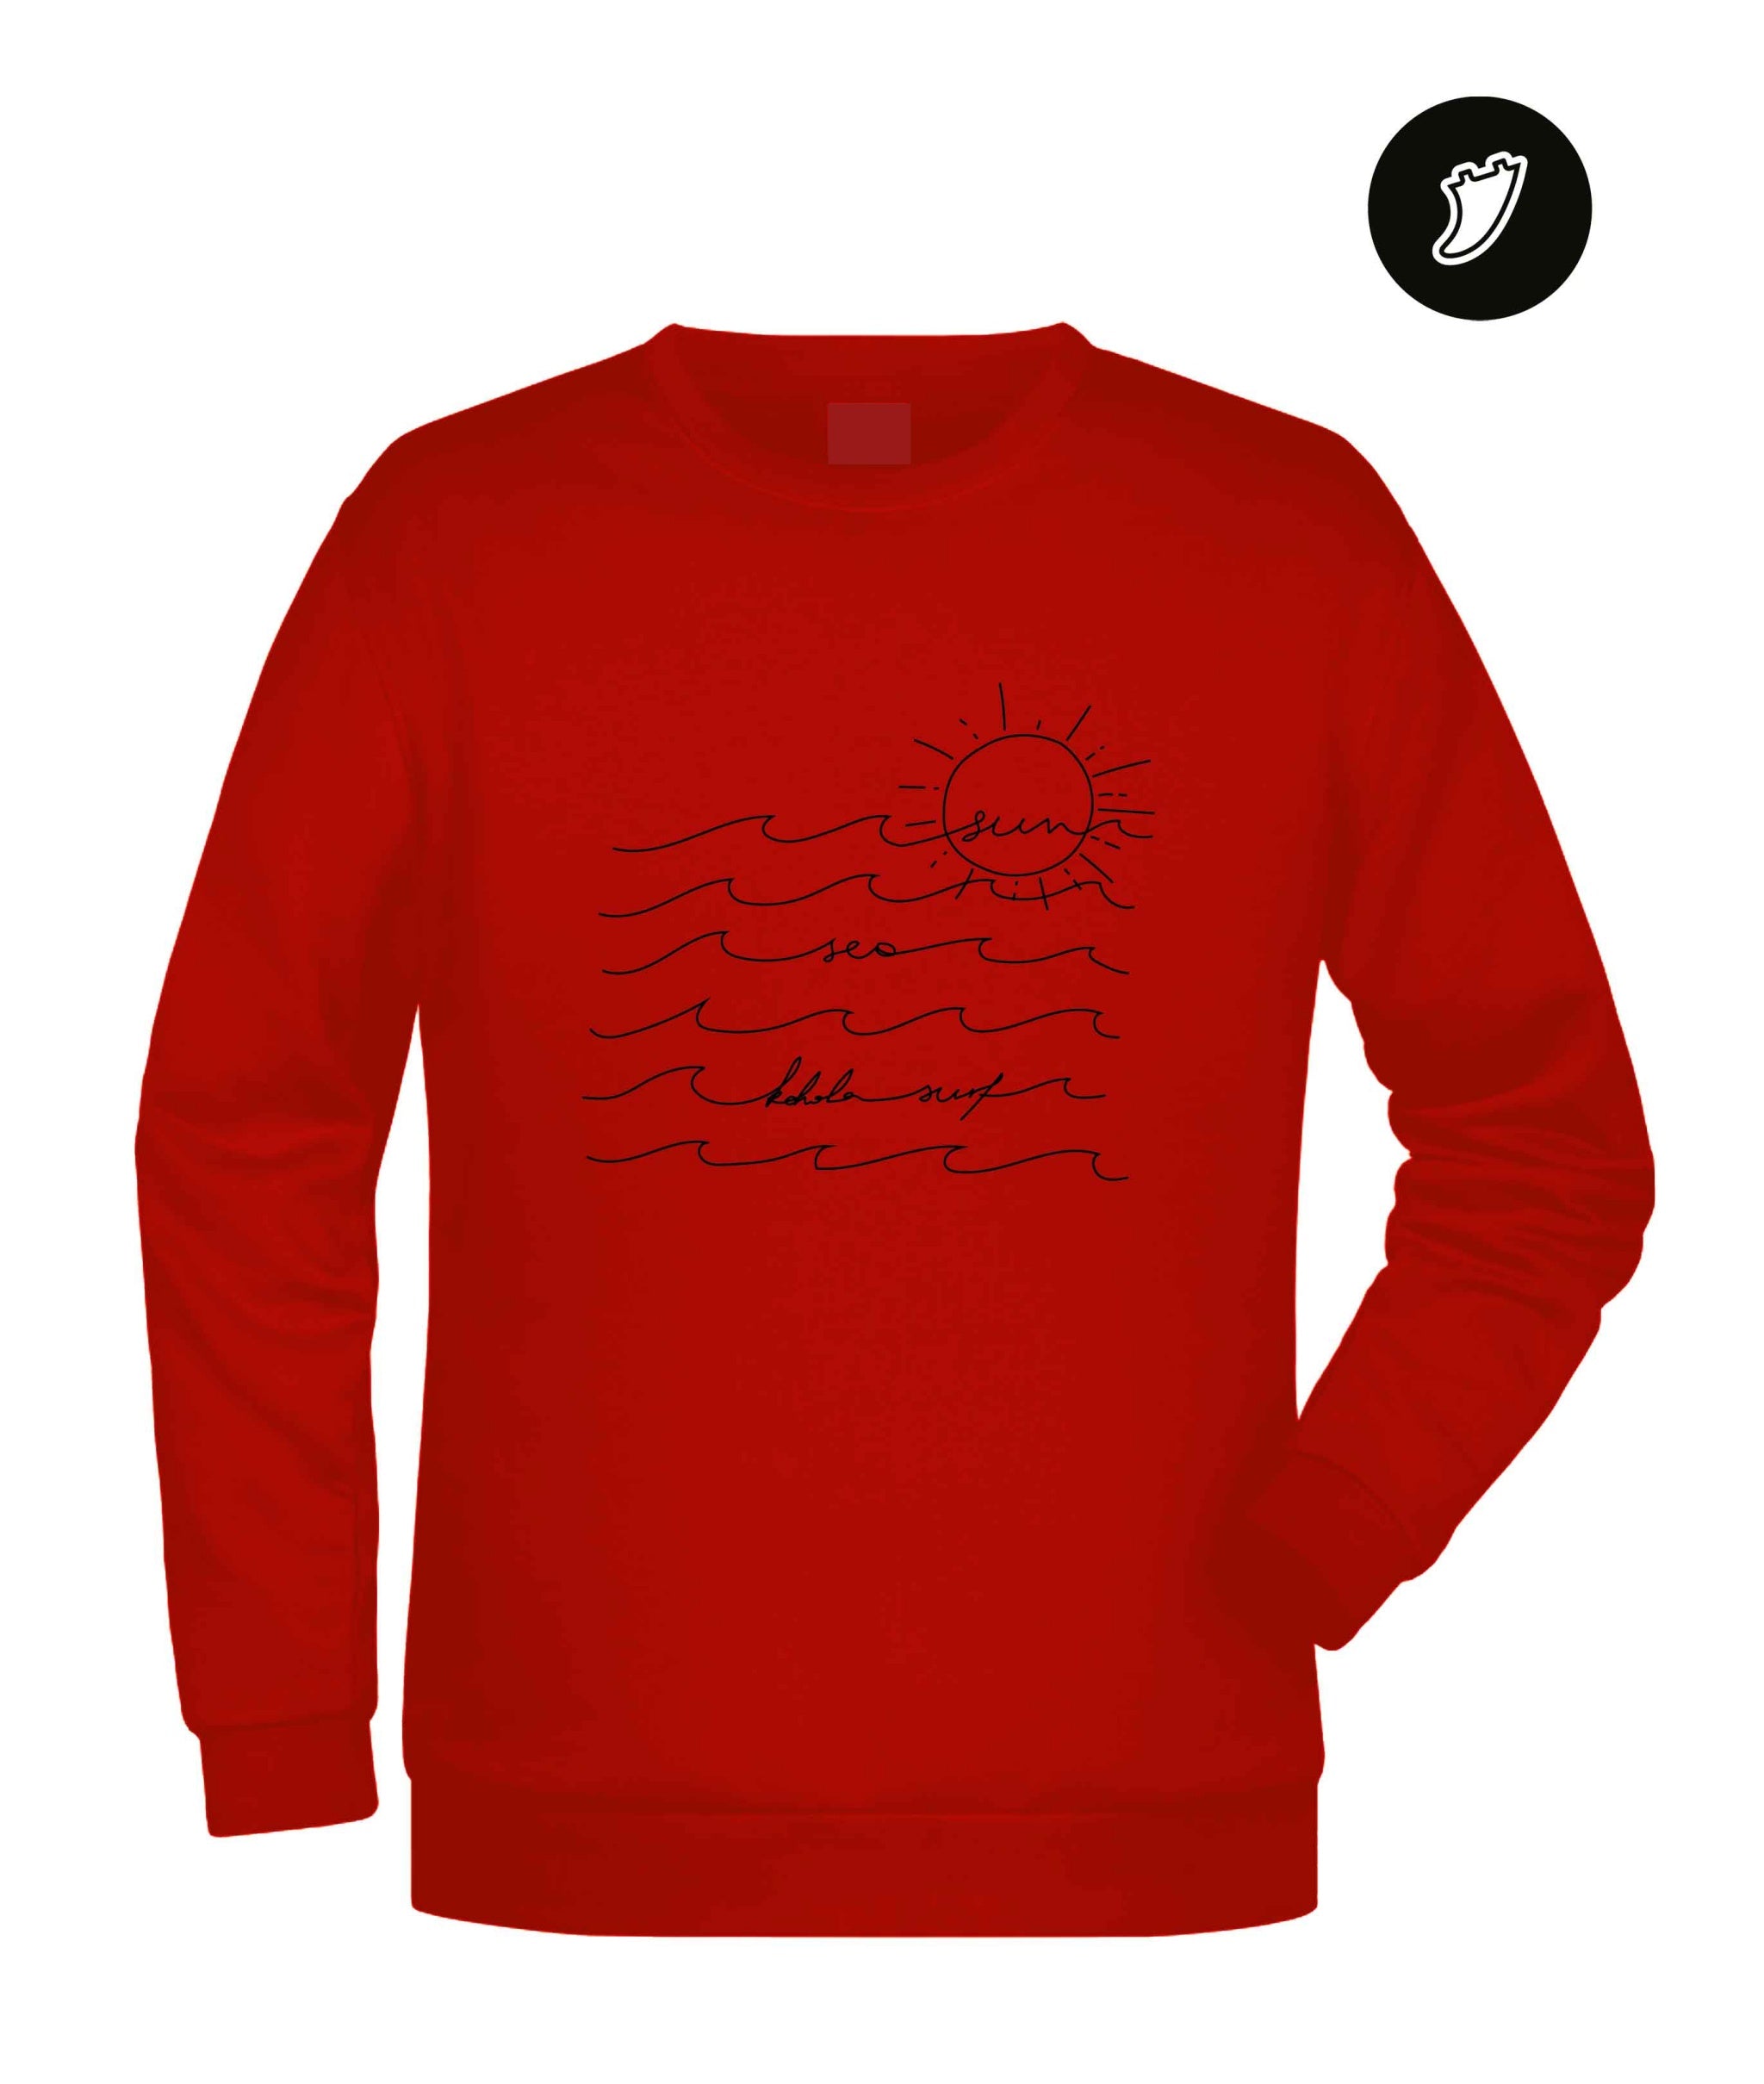 Sea, Sun, Surf Unisex Sweatshirt